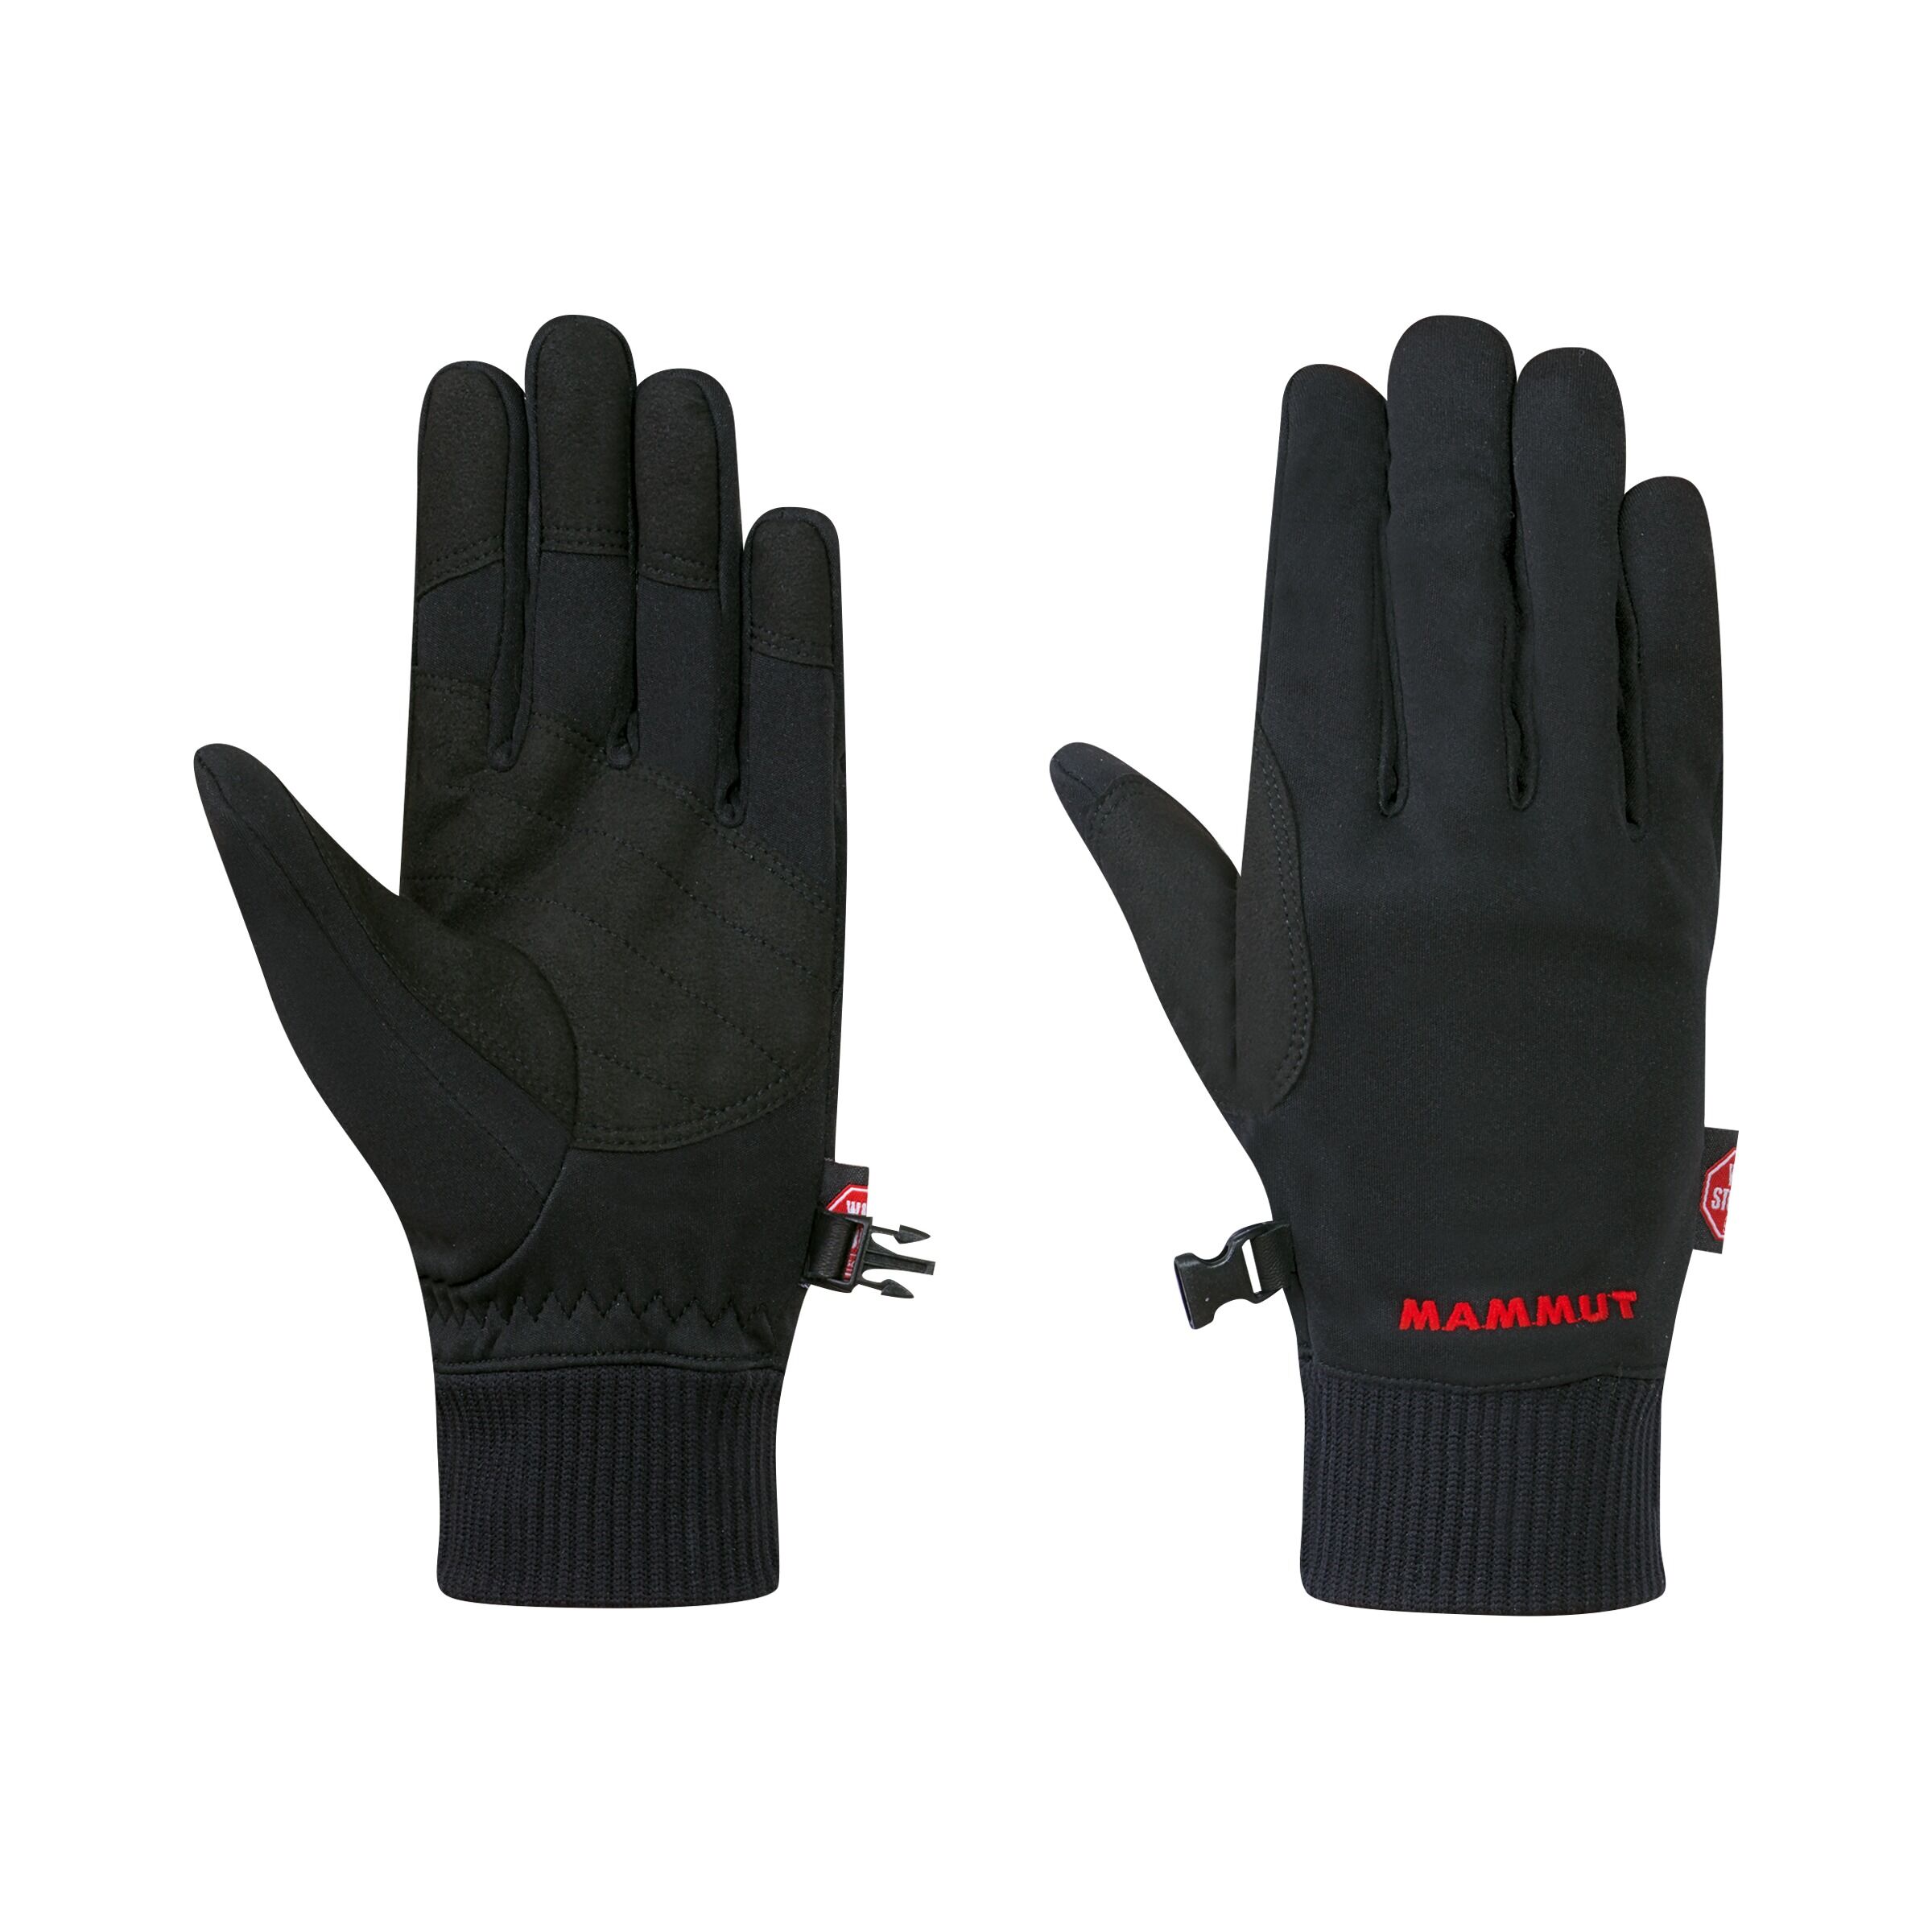 Mammut Astro Glove - Handsker